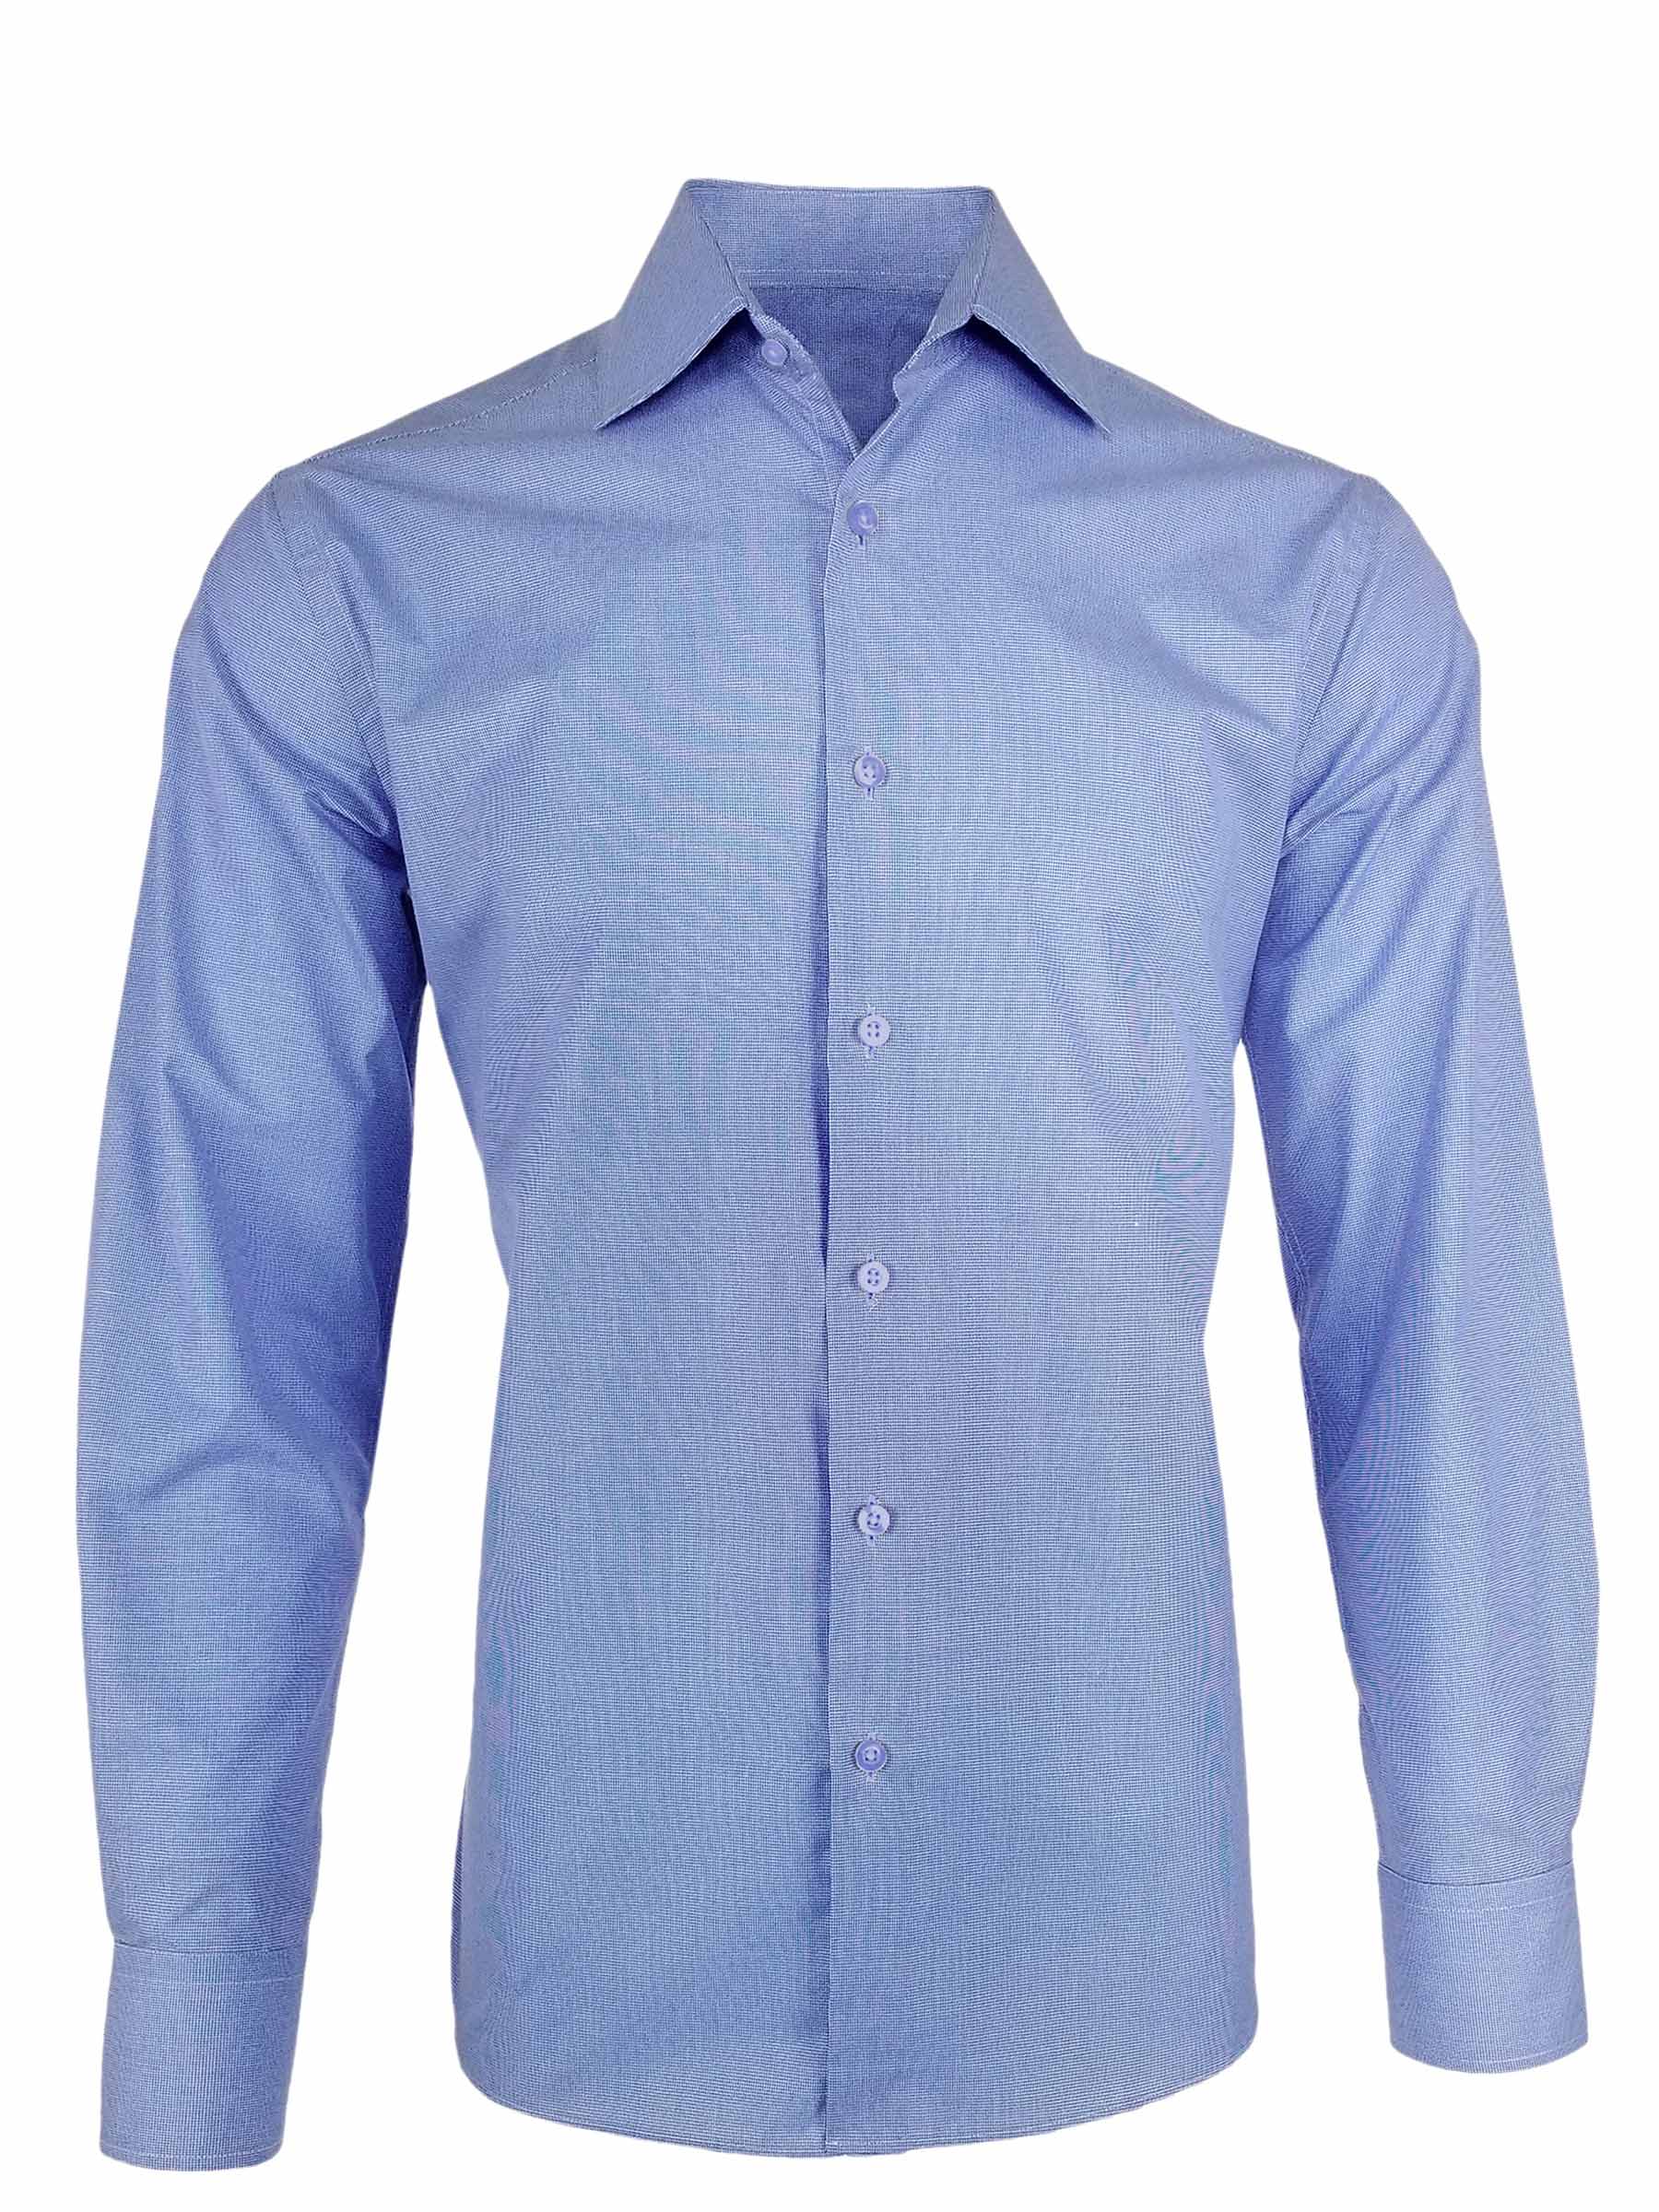 Men's Paris Shirt - Light Blue Micro Check Long Sleeve | Uniform Edit